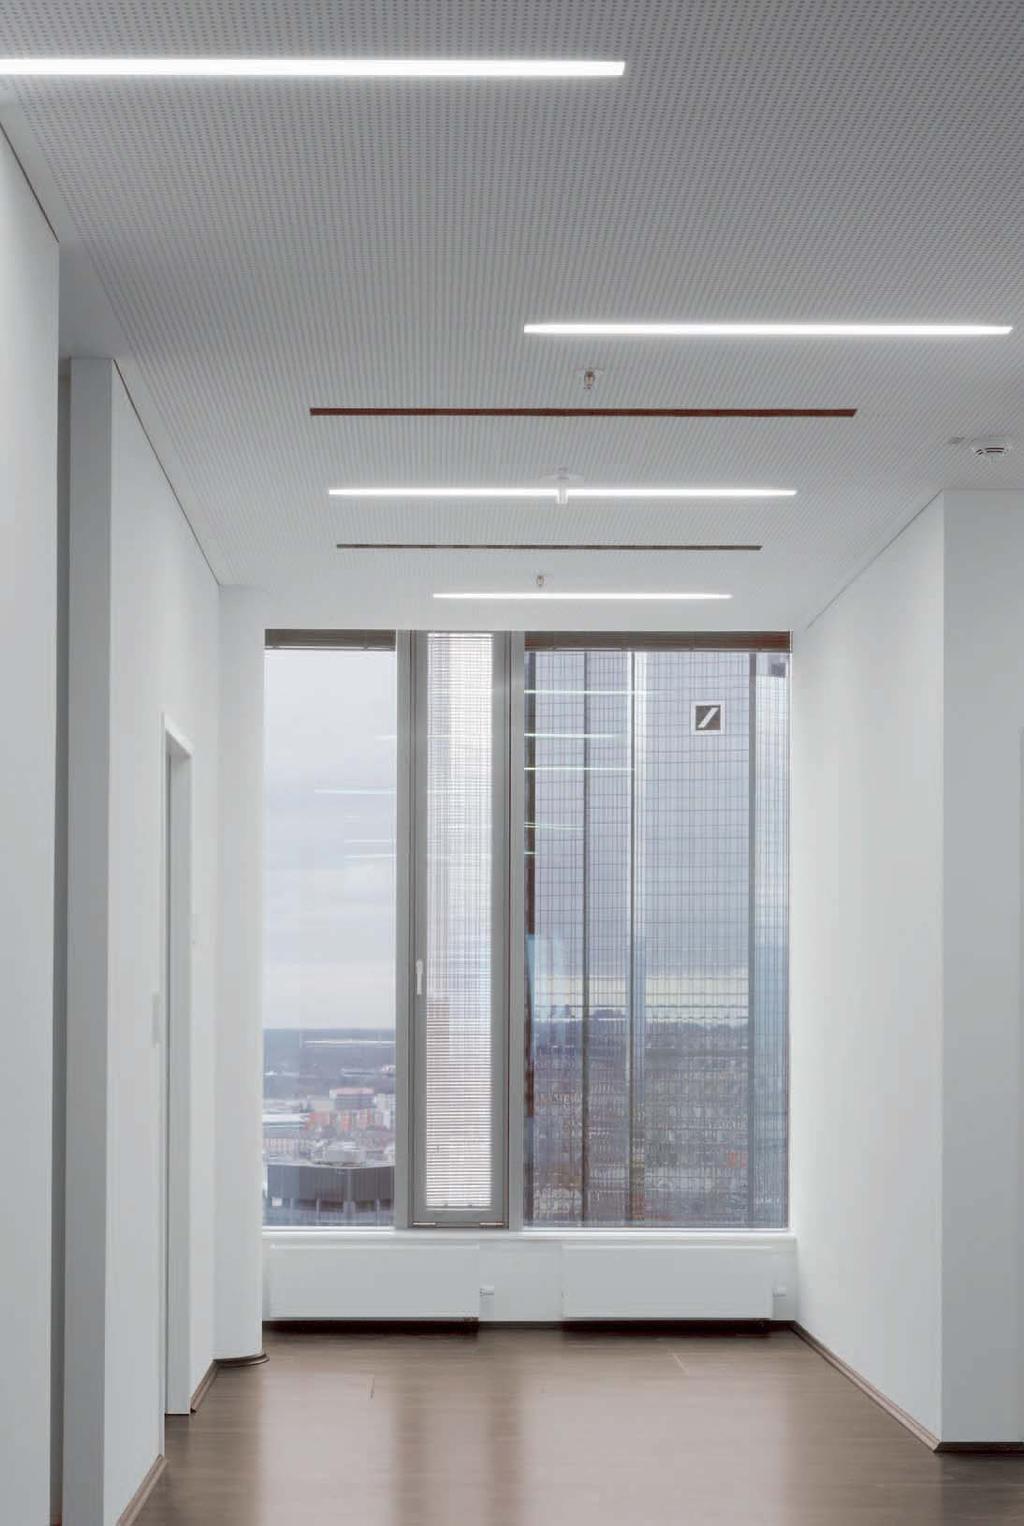 PARK TOWER OFFICES, FRANKFURT AM MAIN Architect: AS&P Albert Speer &